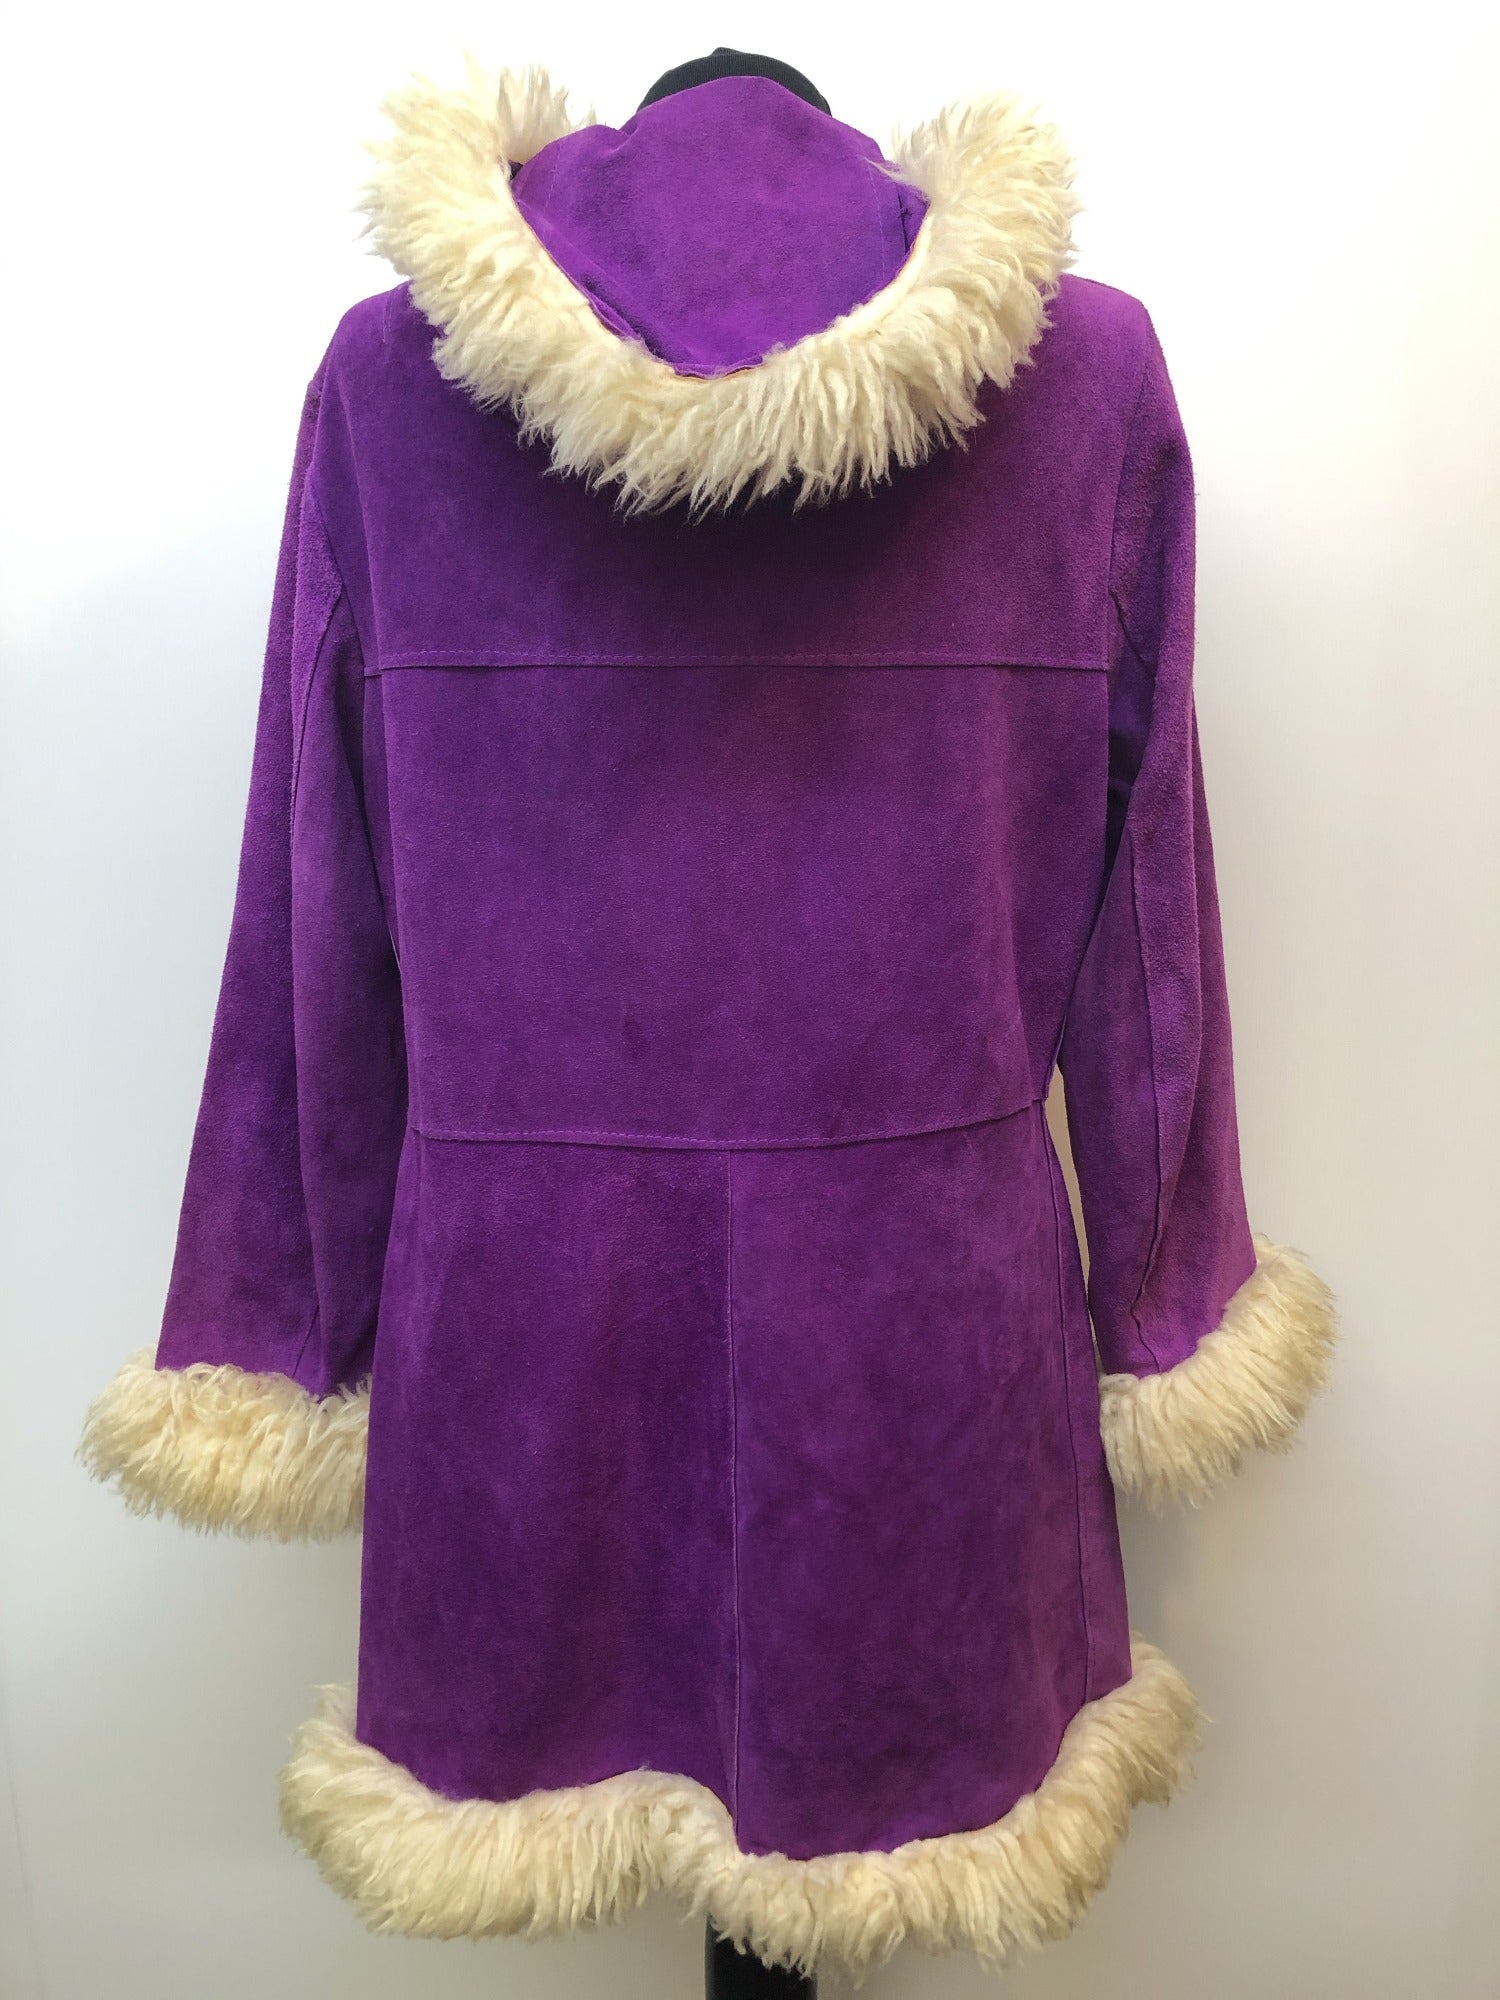 womens jacket  womens coat  womens  vintage  Urban Village Vintage  Sheepskin  purple  Jacket  hooded  hood  16 urban village vintage